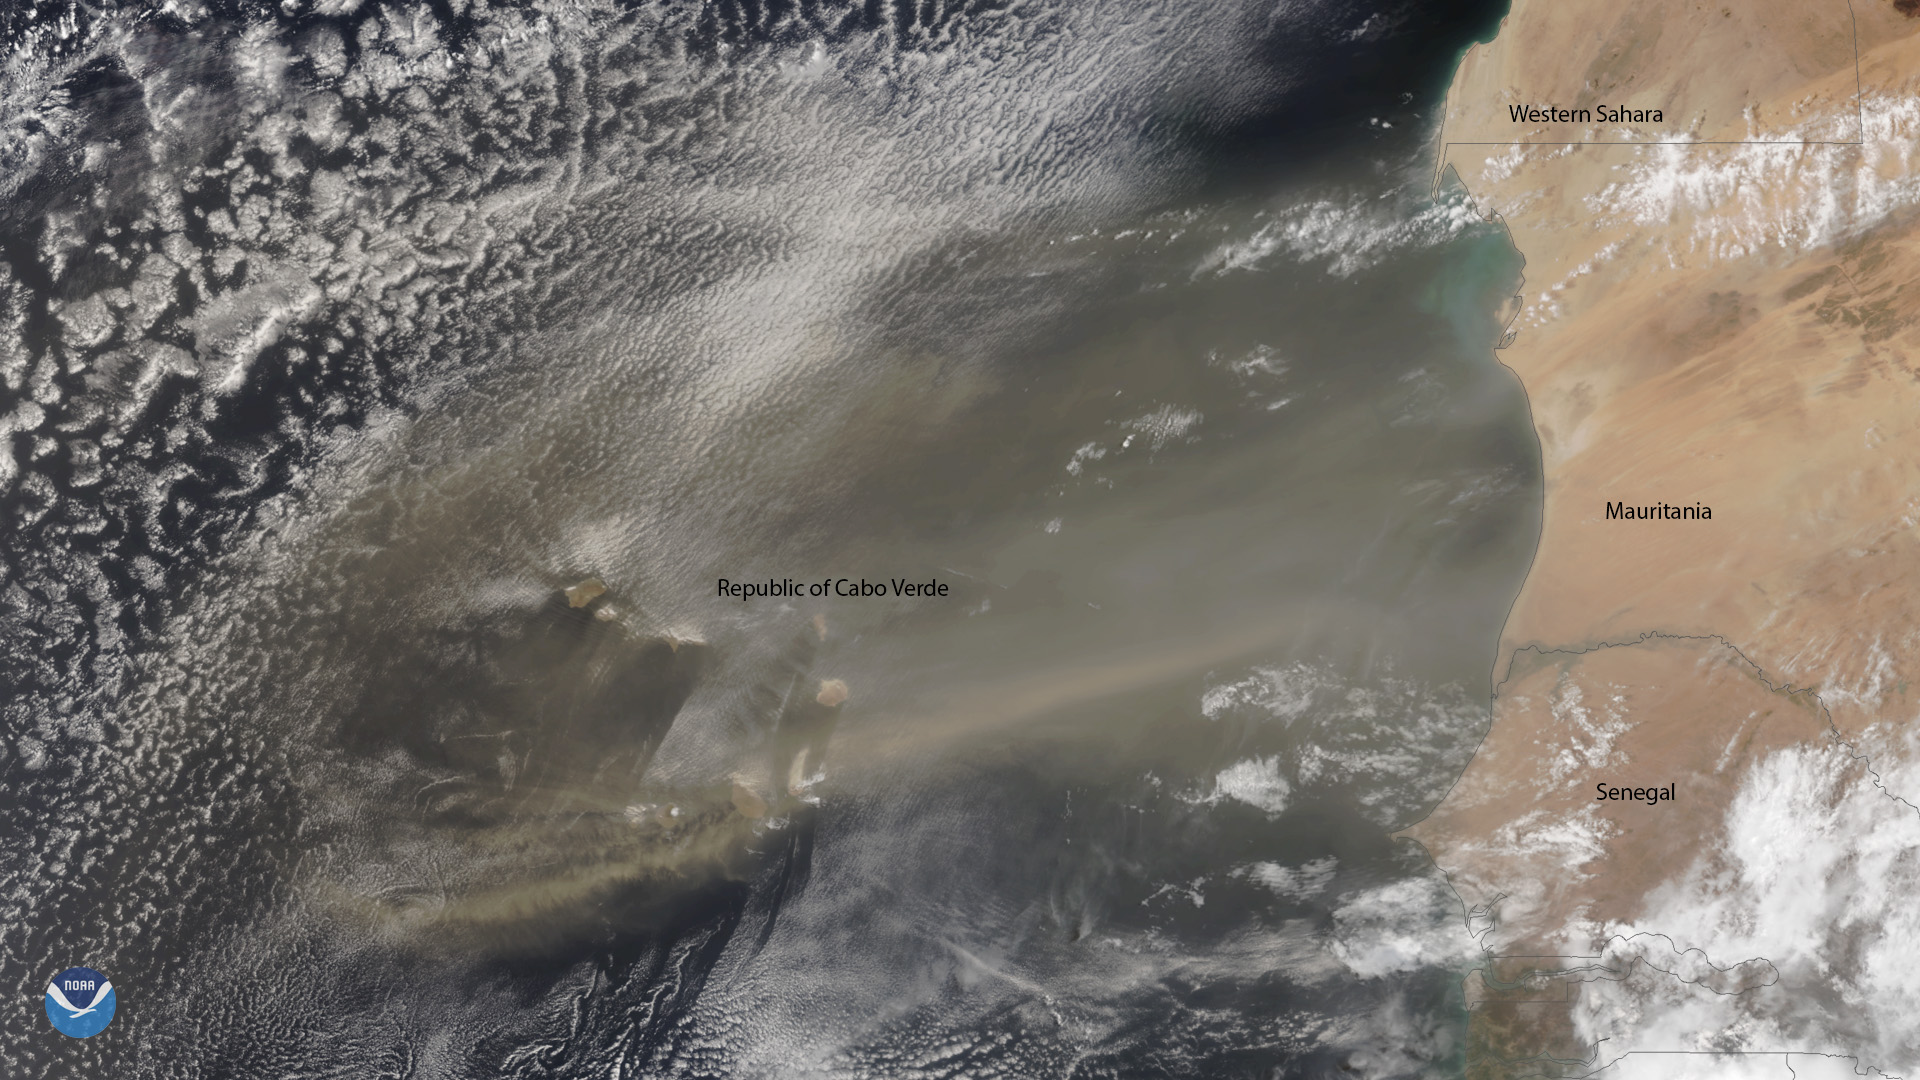 Plume of Saharan Dust Envelops the Republic of Cabo Verde